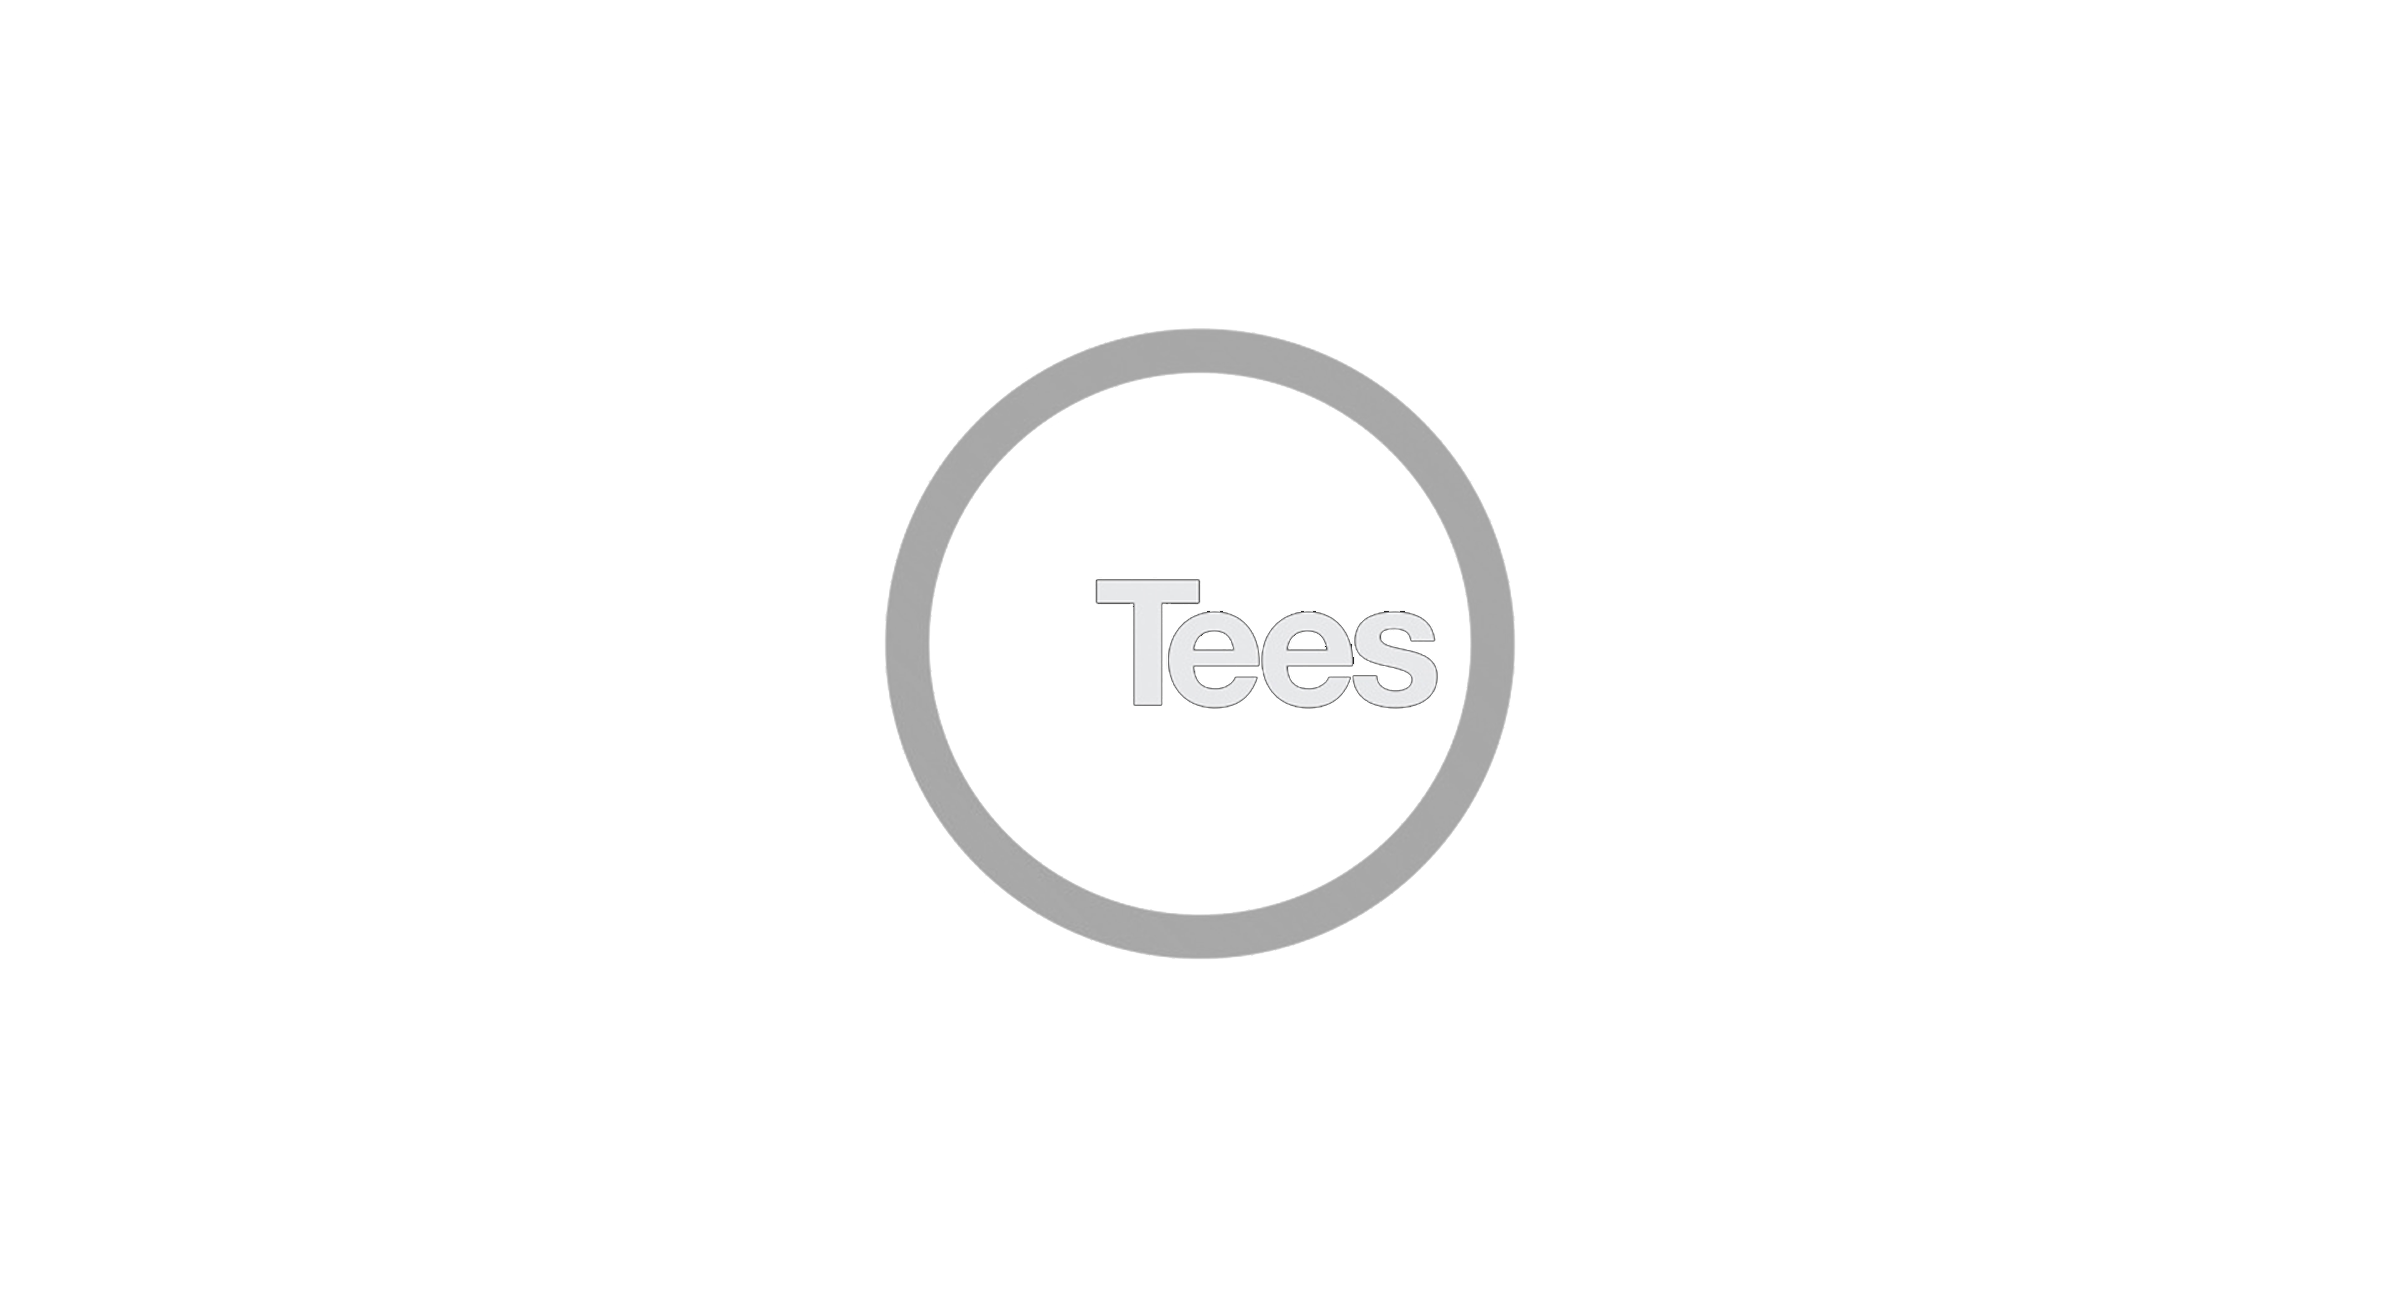 Tees-Law-logotype-Peek-Creative-Limited